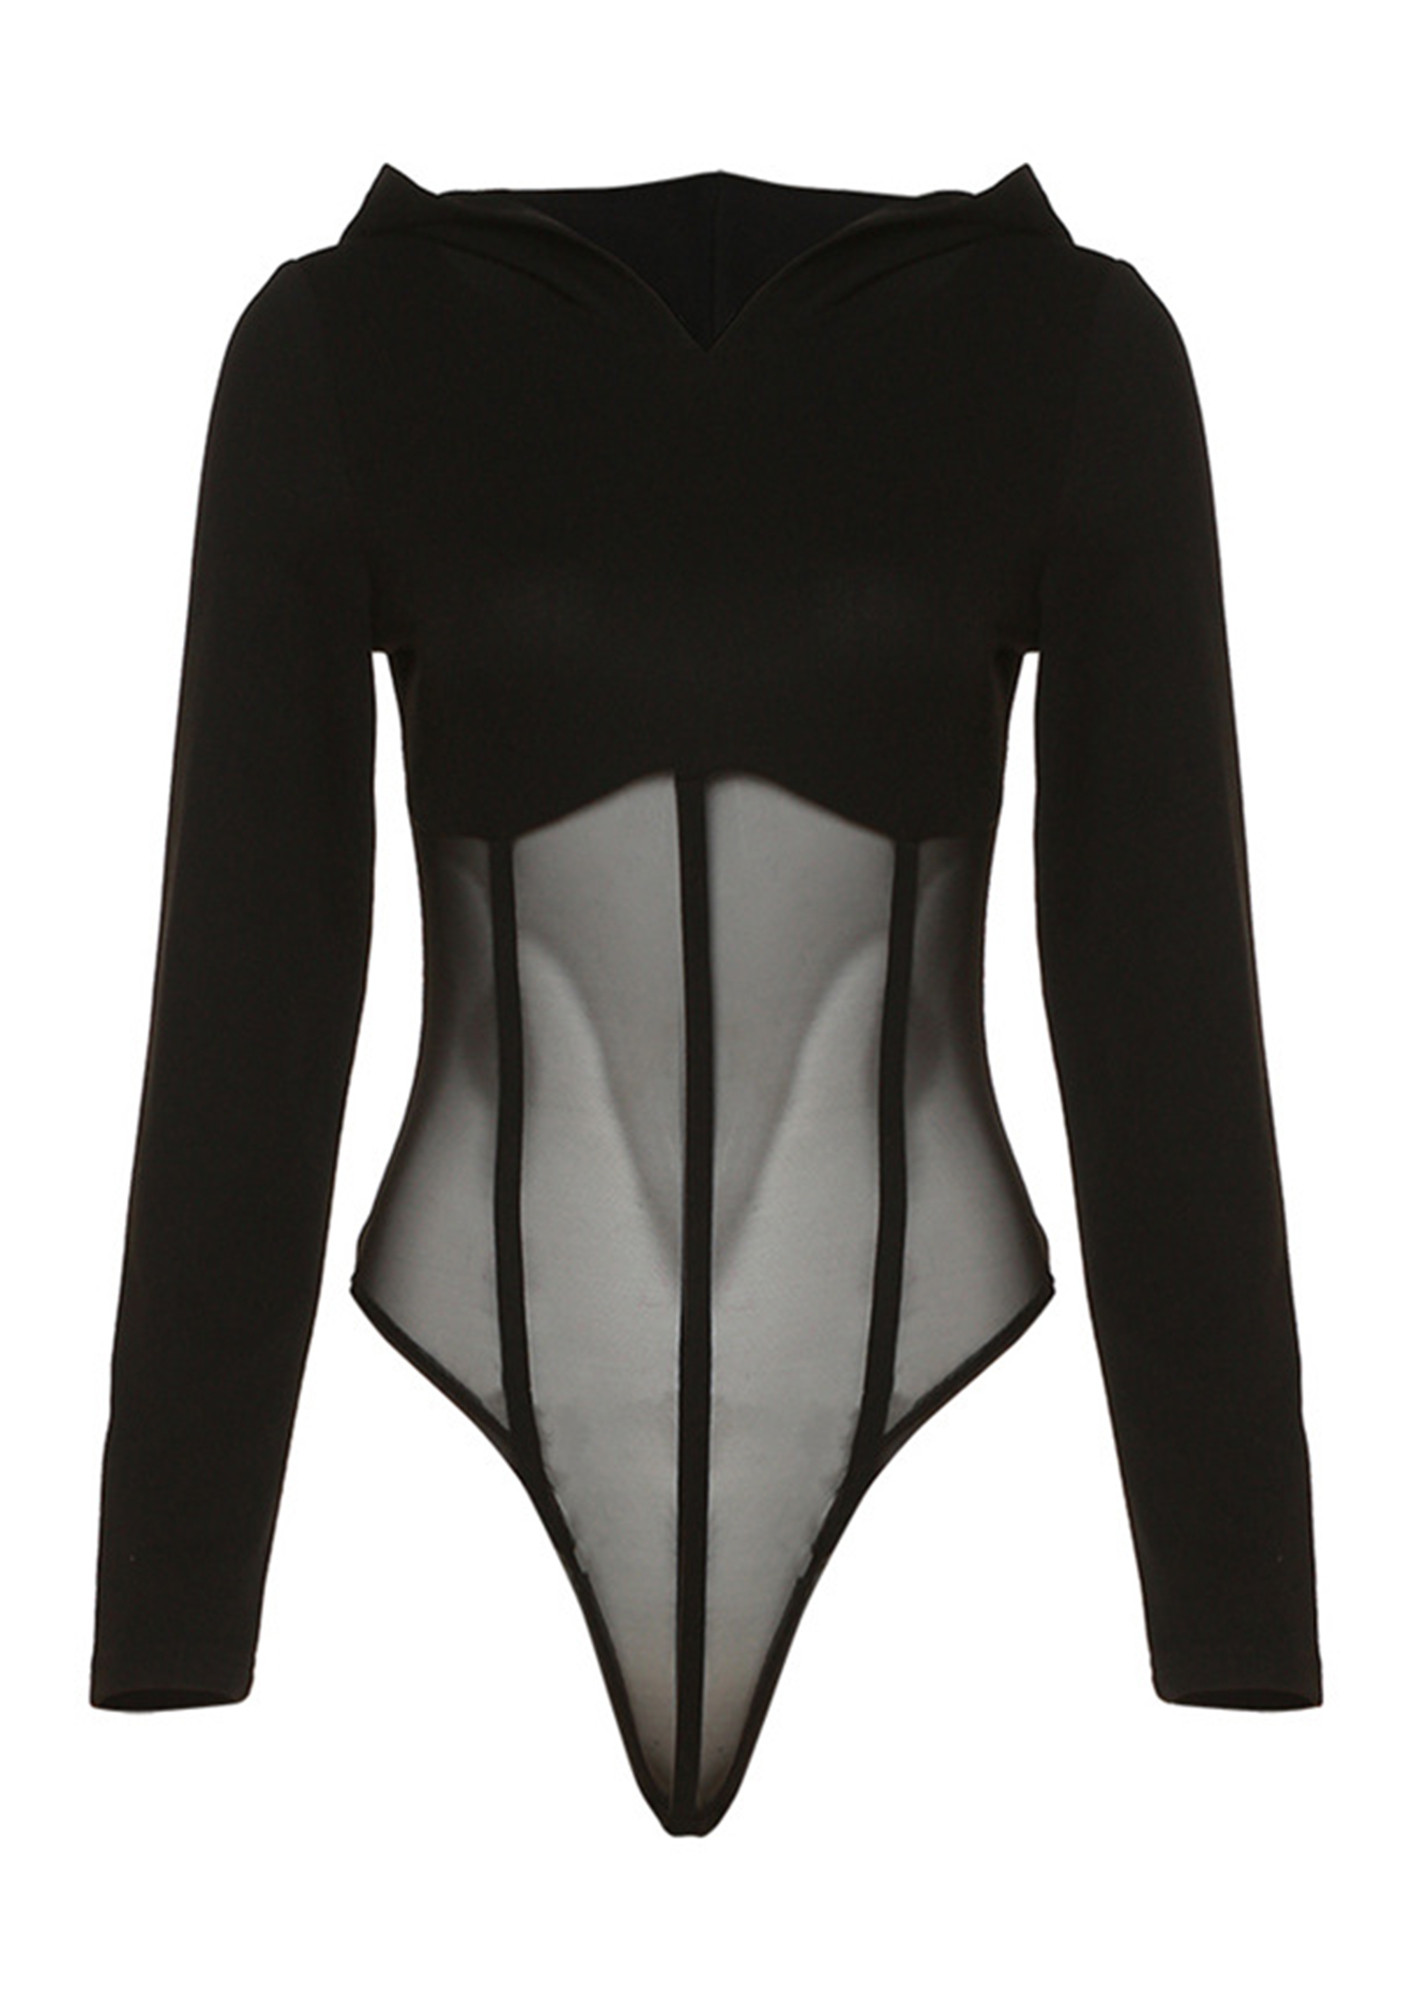 Best Black-Spandex-Full-Bodysuit - Buy Black-Spandex-Full-Bodysuit at Cheap  Price from China